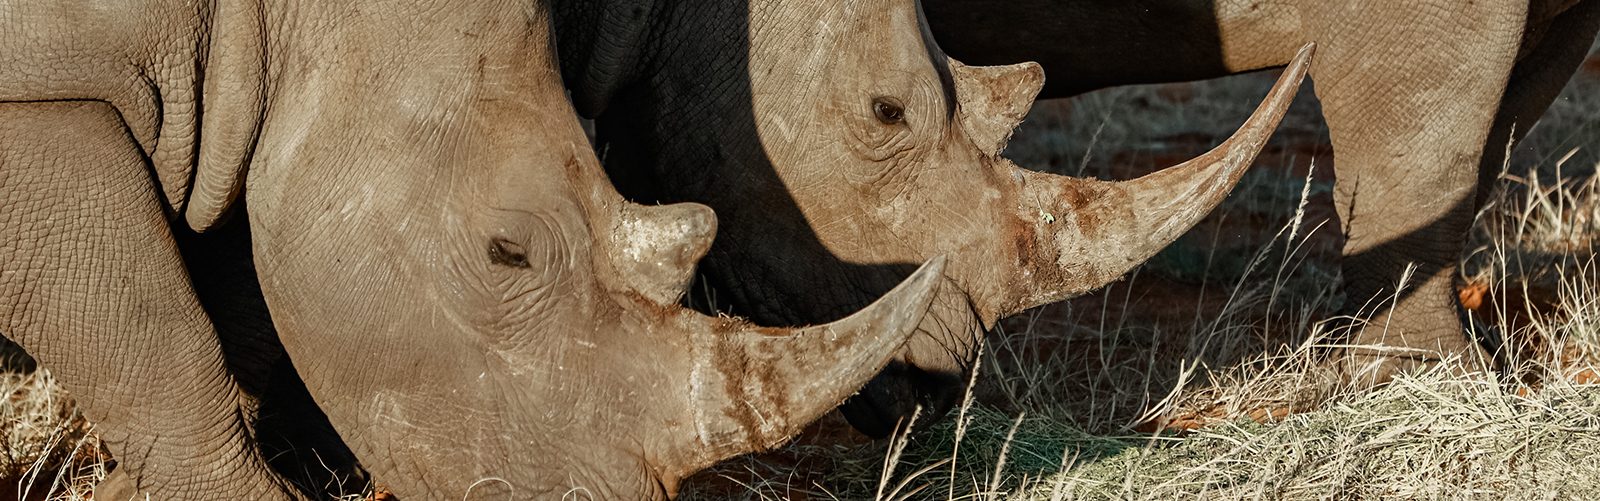 At the rhino sanctuary Namibia you can help saving the white rhinos.